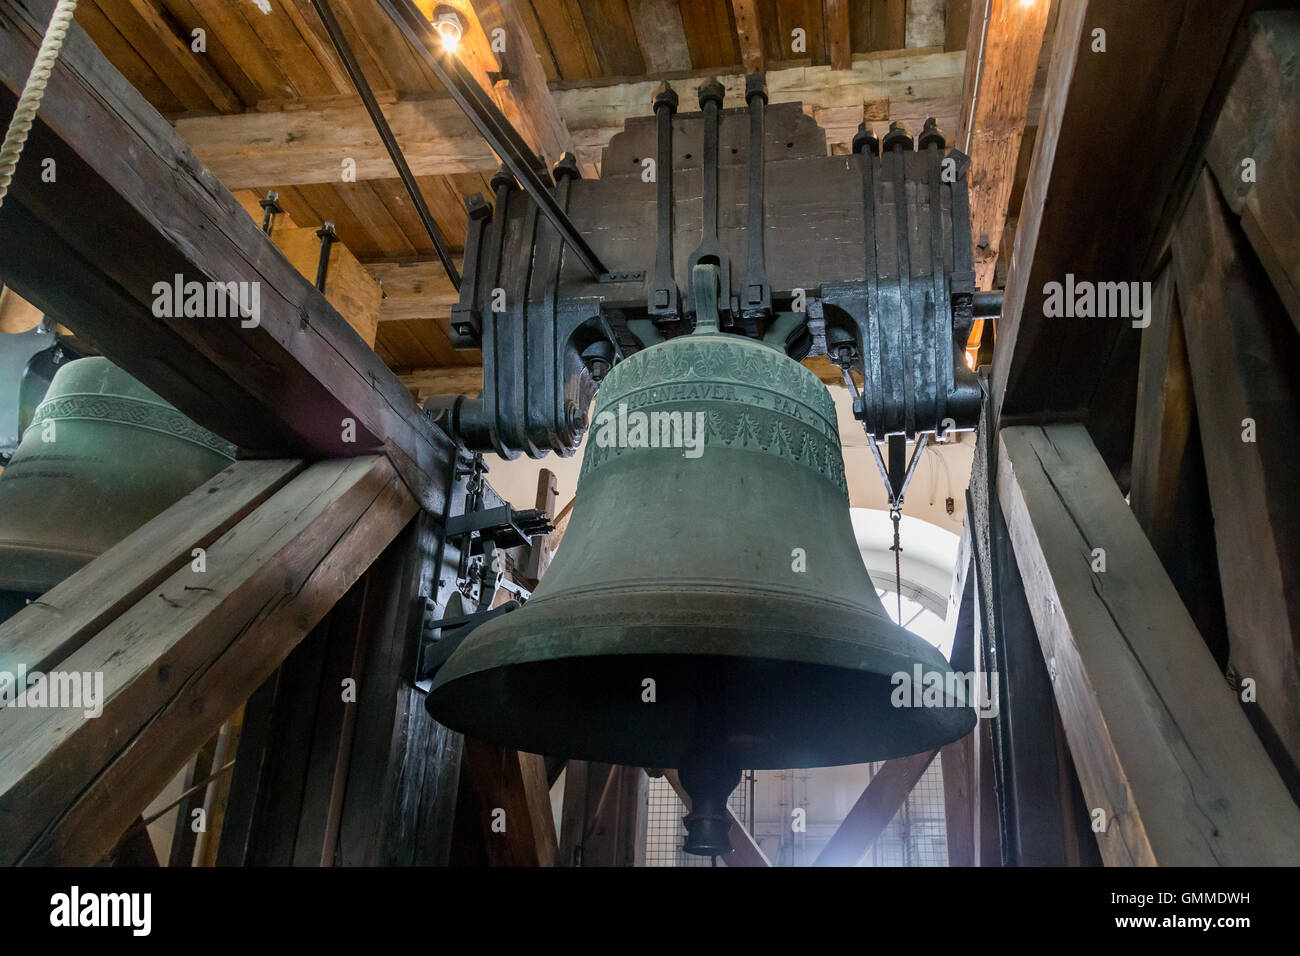 Copenhagen, Denmark - August 15, 2016: The bell inside the tower of Vor Frue Cathedral Stock Photo